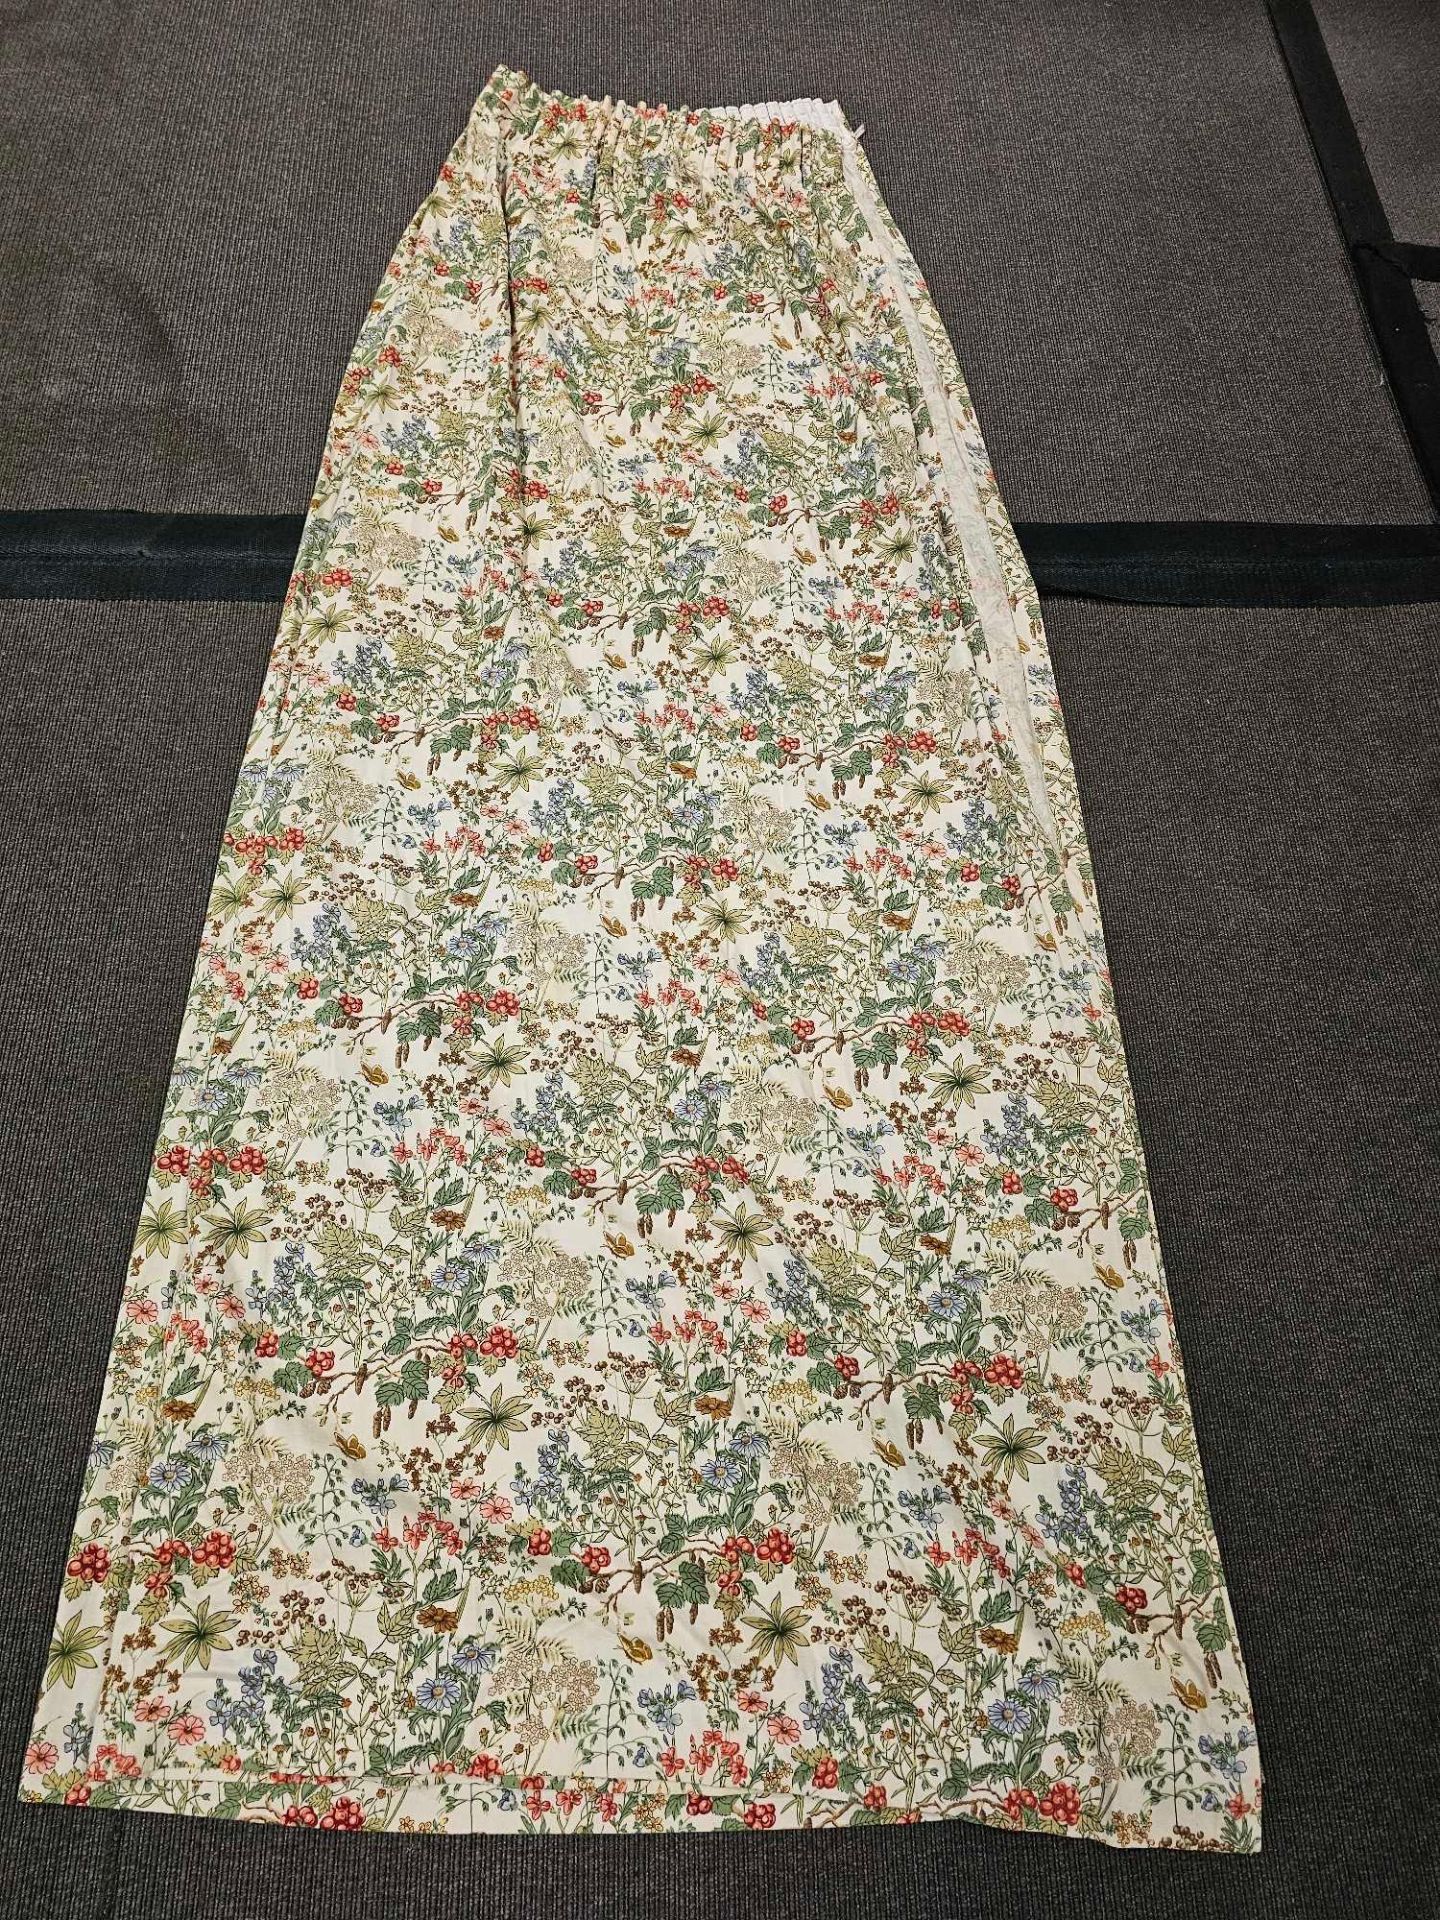 A Pair Of Cotton Flower Curtains Size -cm 174 x 170 Ref Dorch 76